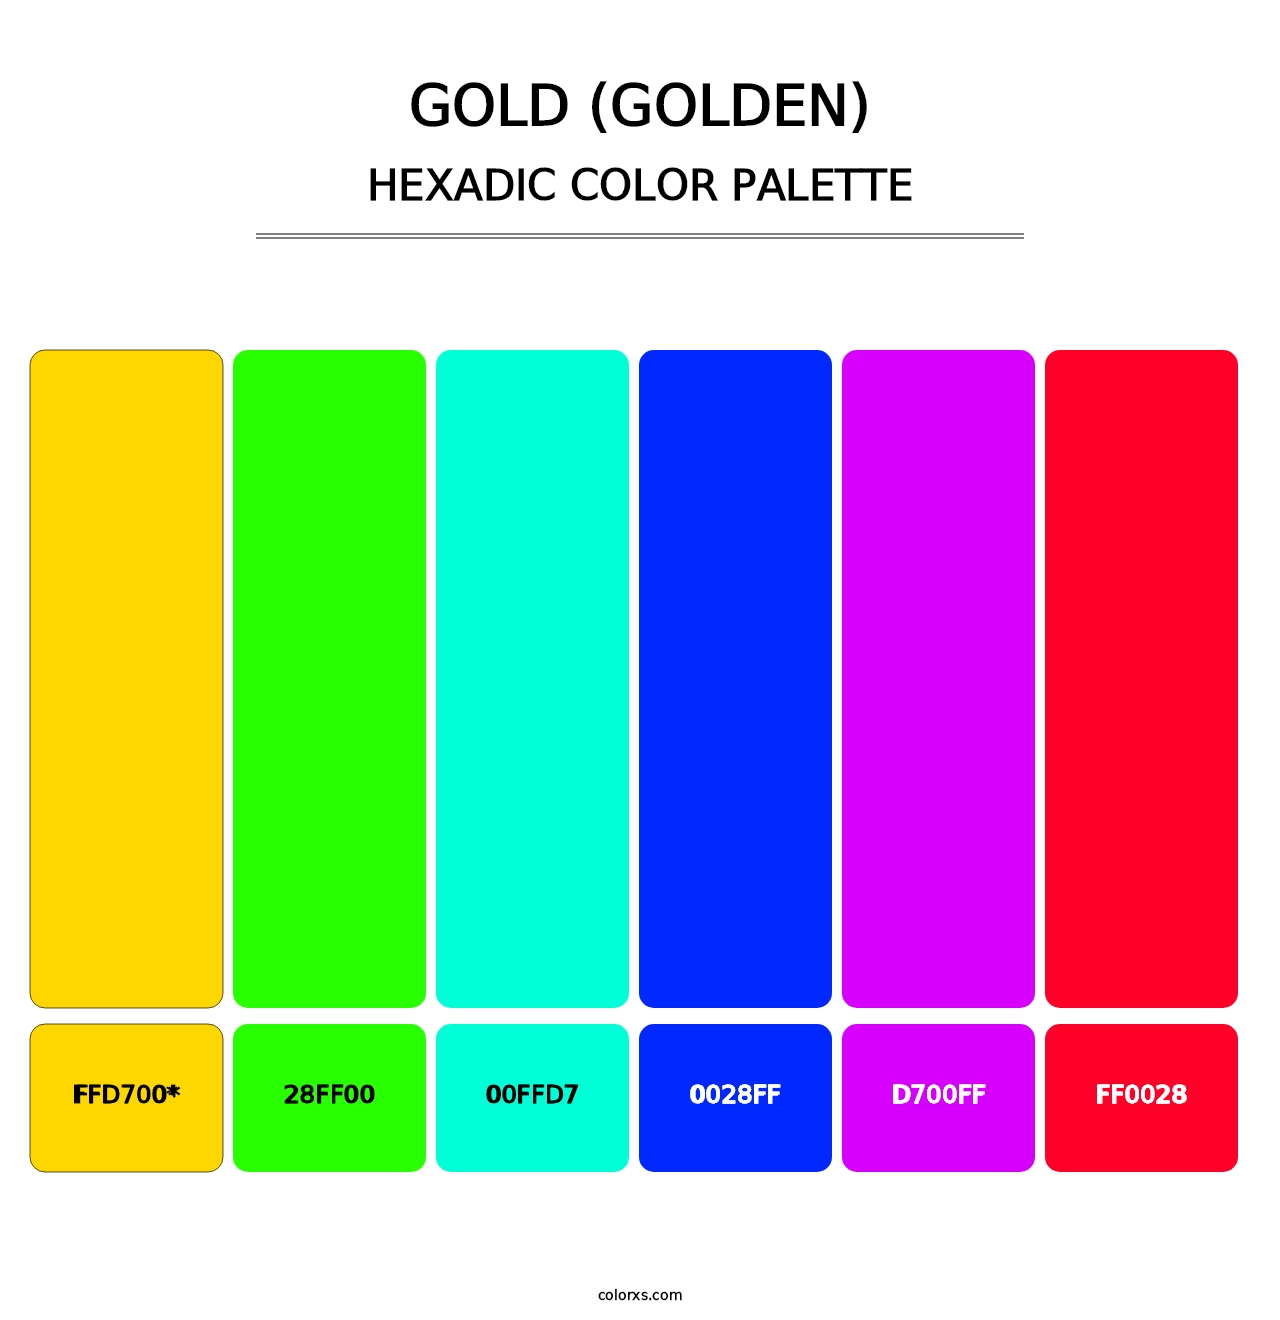 Gold (Golden) - Hexadic Color Palette